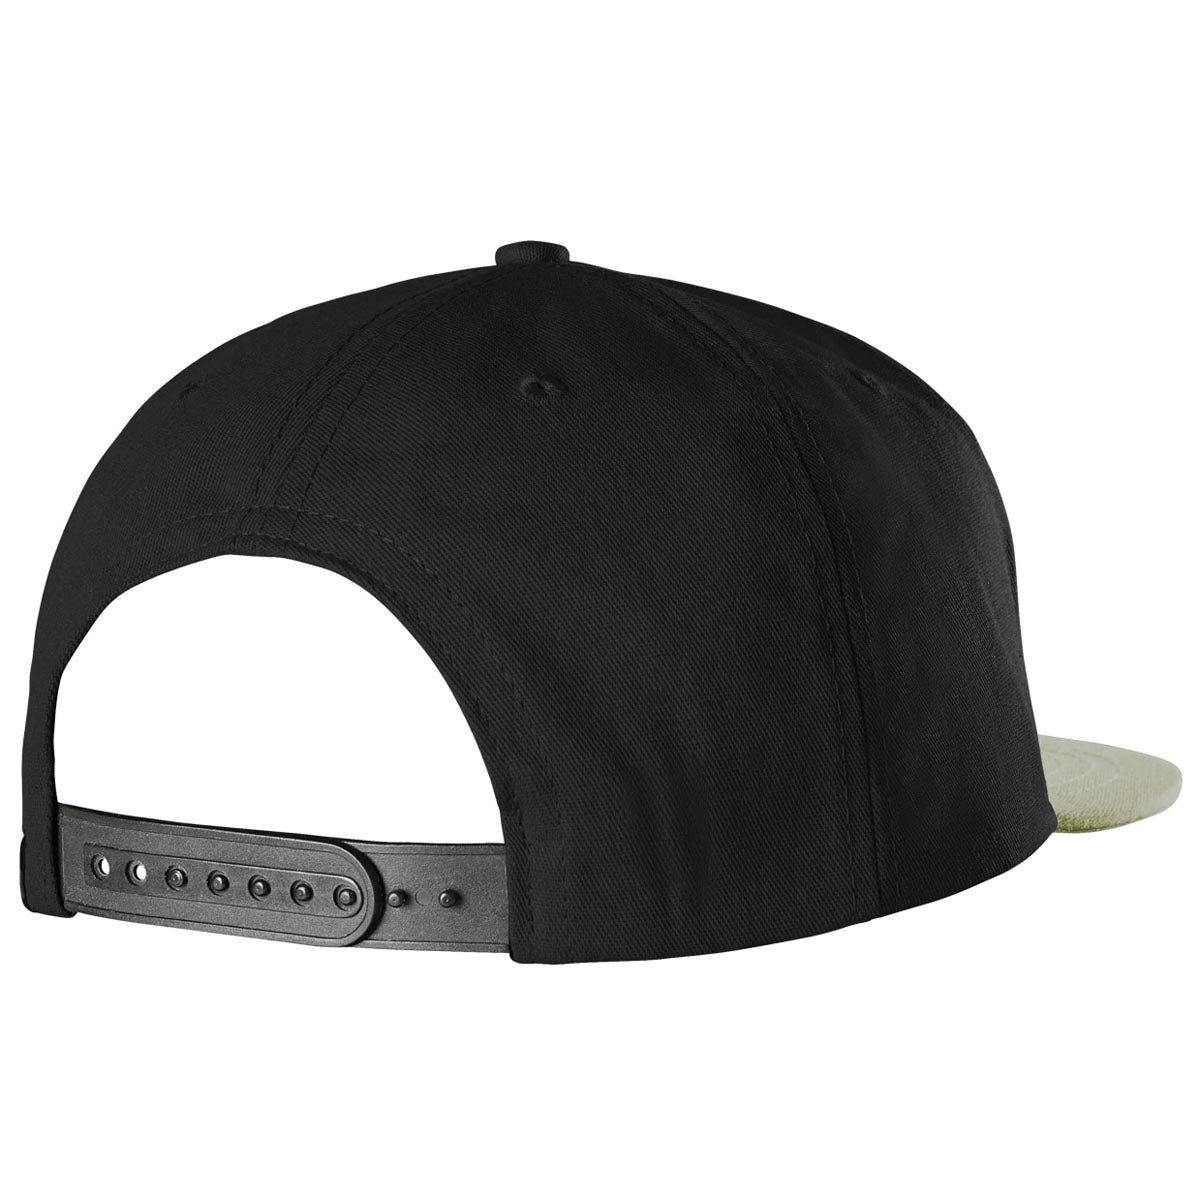 Etnies Corp Snapback Hat - Black/Black/Gum image 2